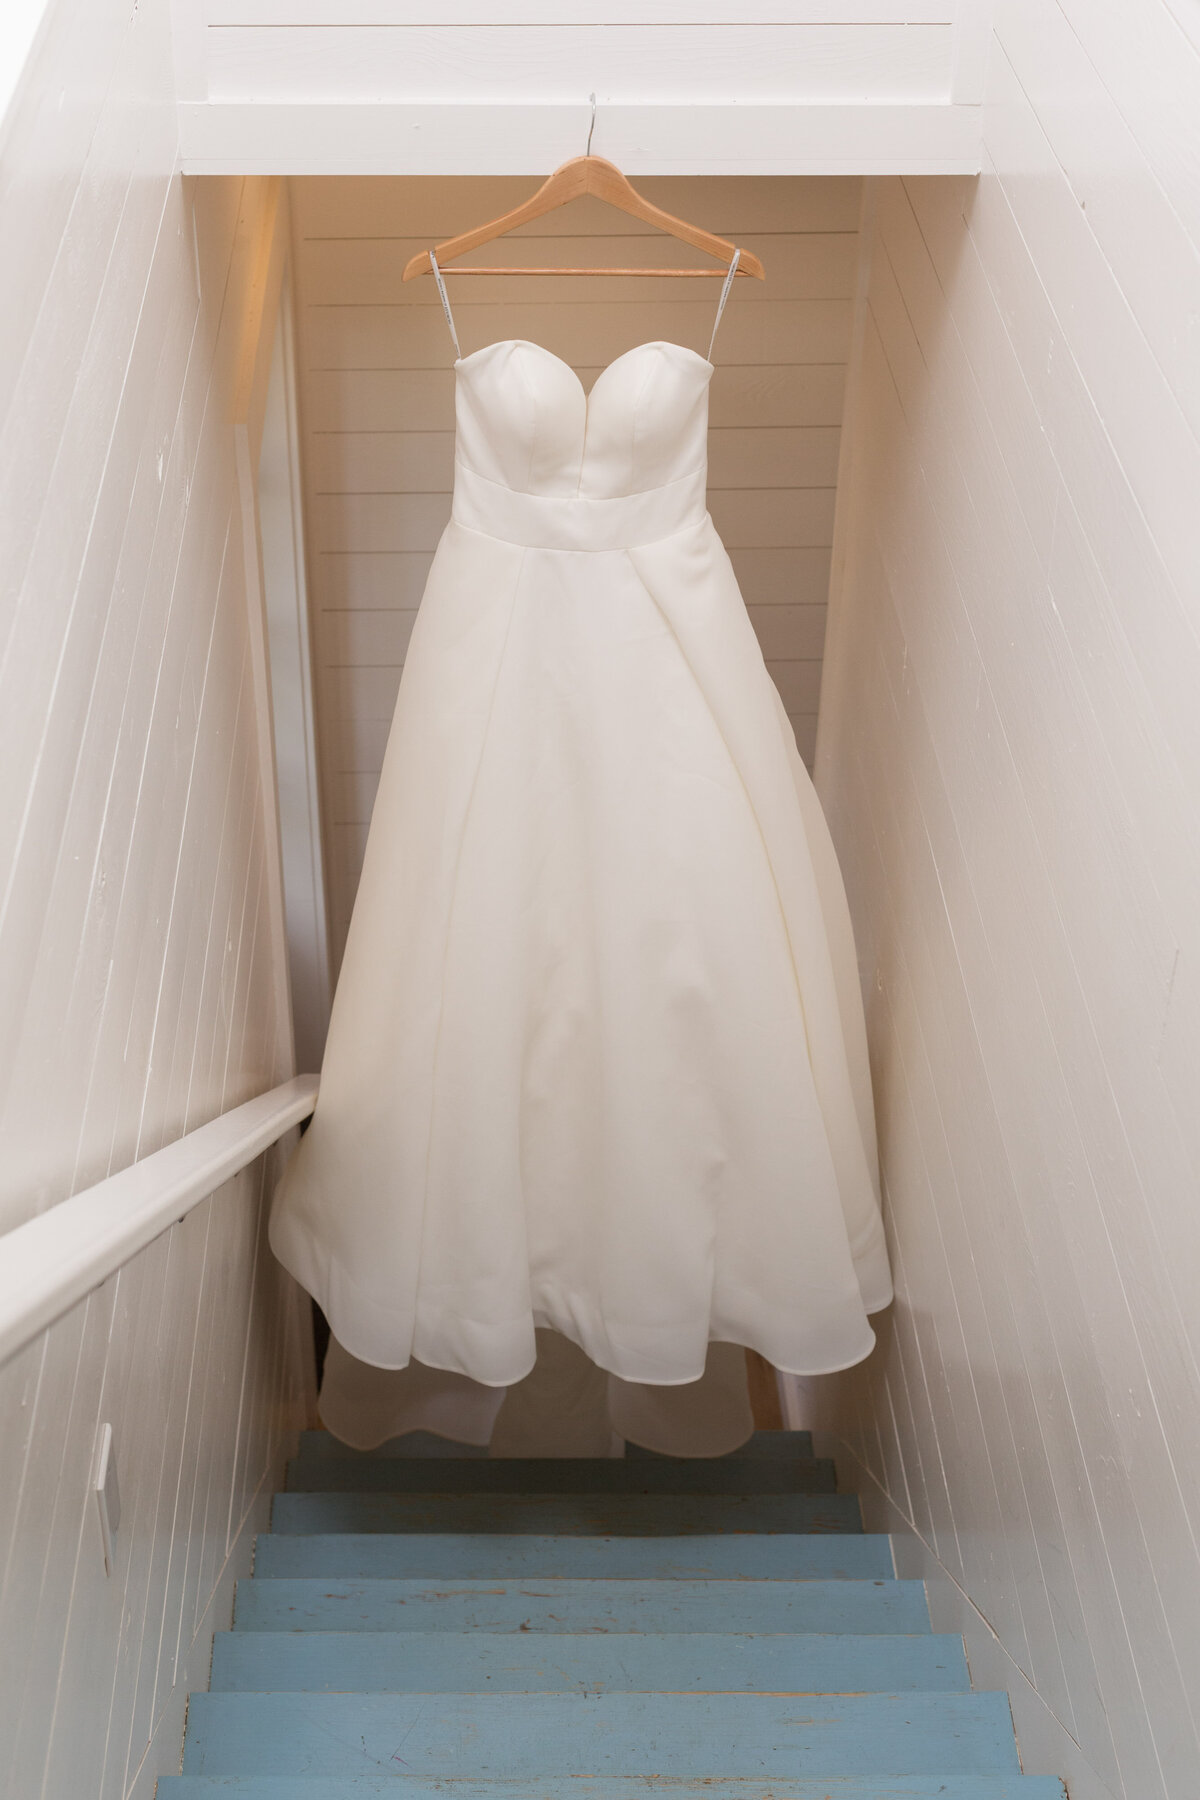 Wedding dress detail photo on stairs